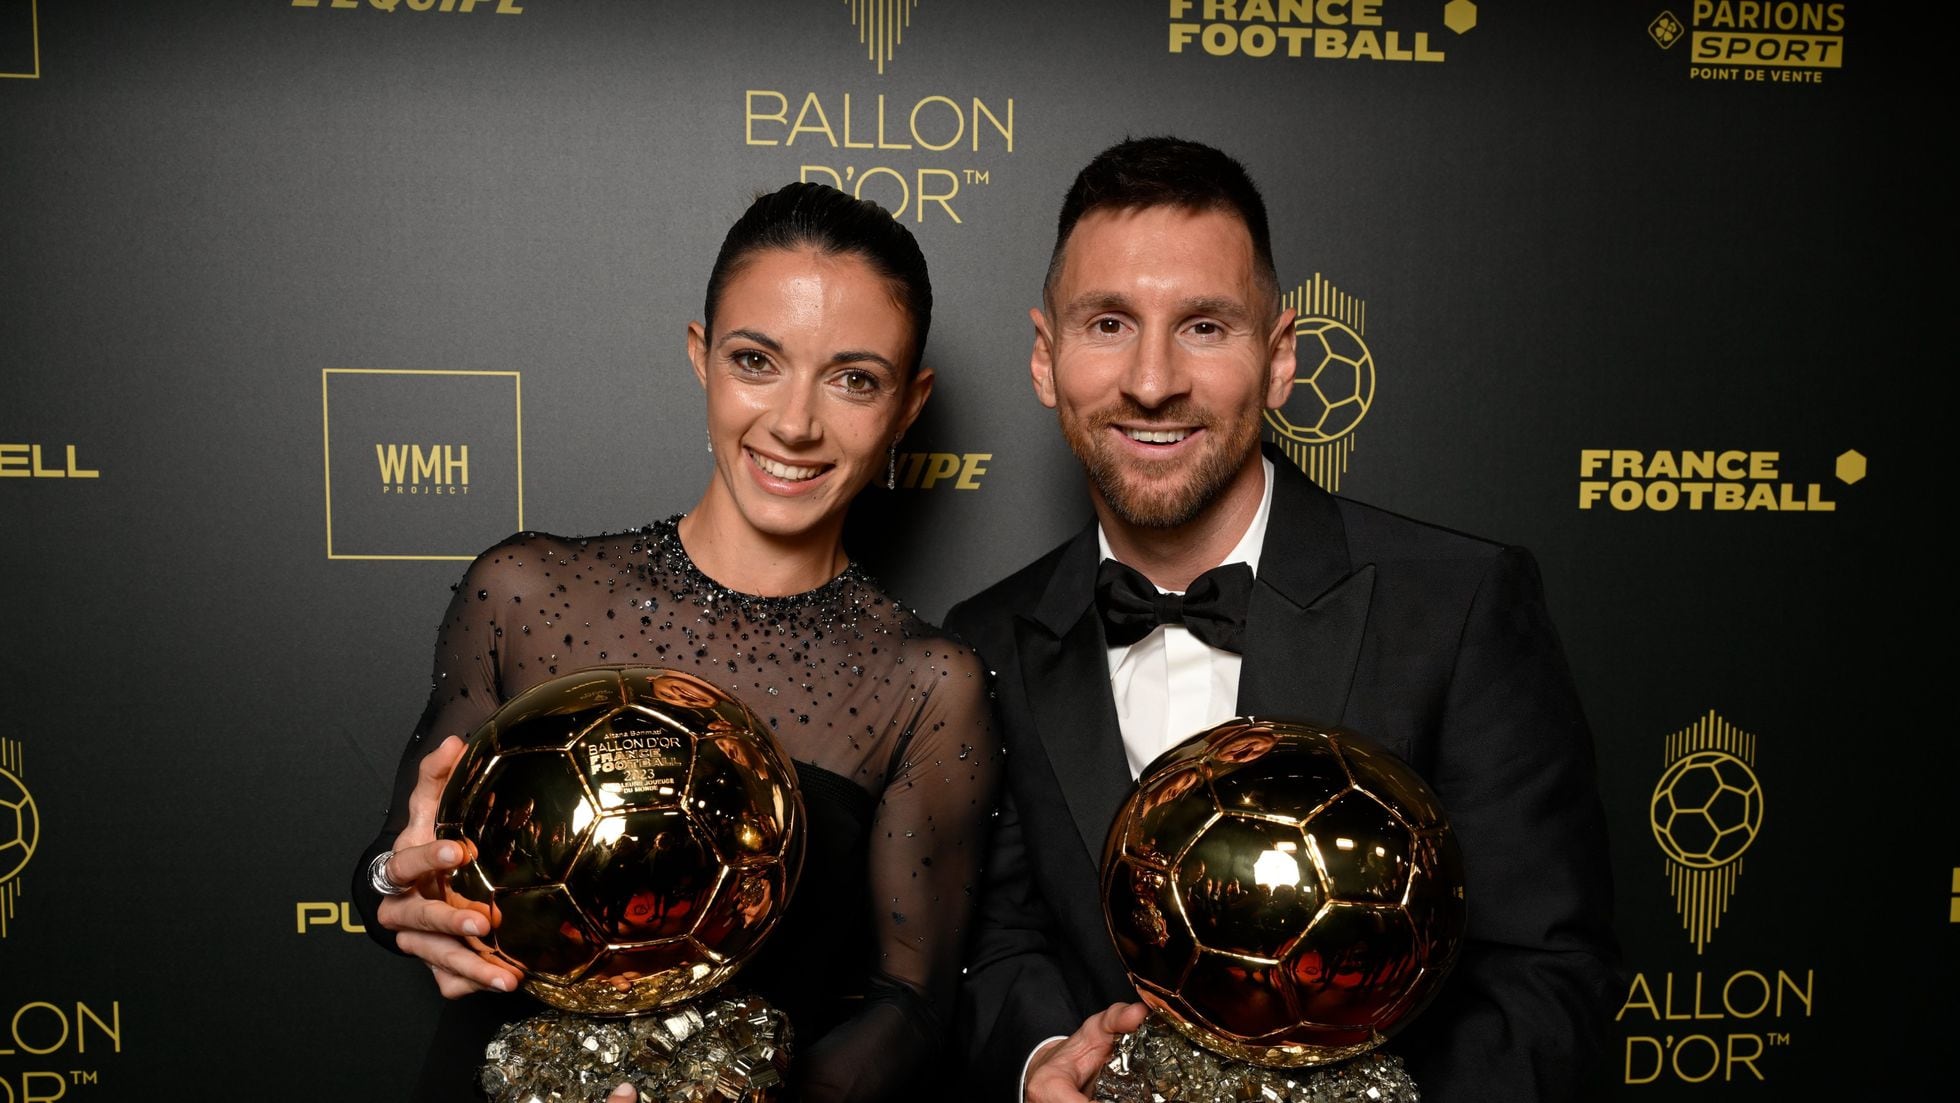 Ballon d'Or: Aitana Bonmatí and Leo Messi land best player awards in Paris, Sports